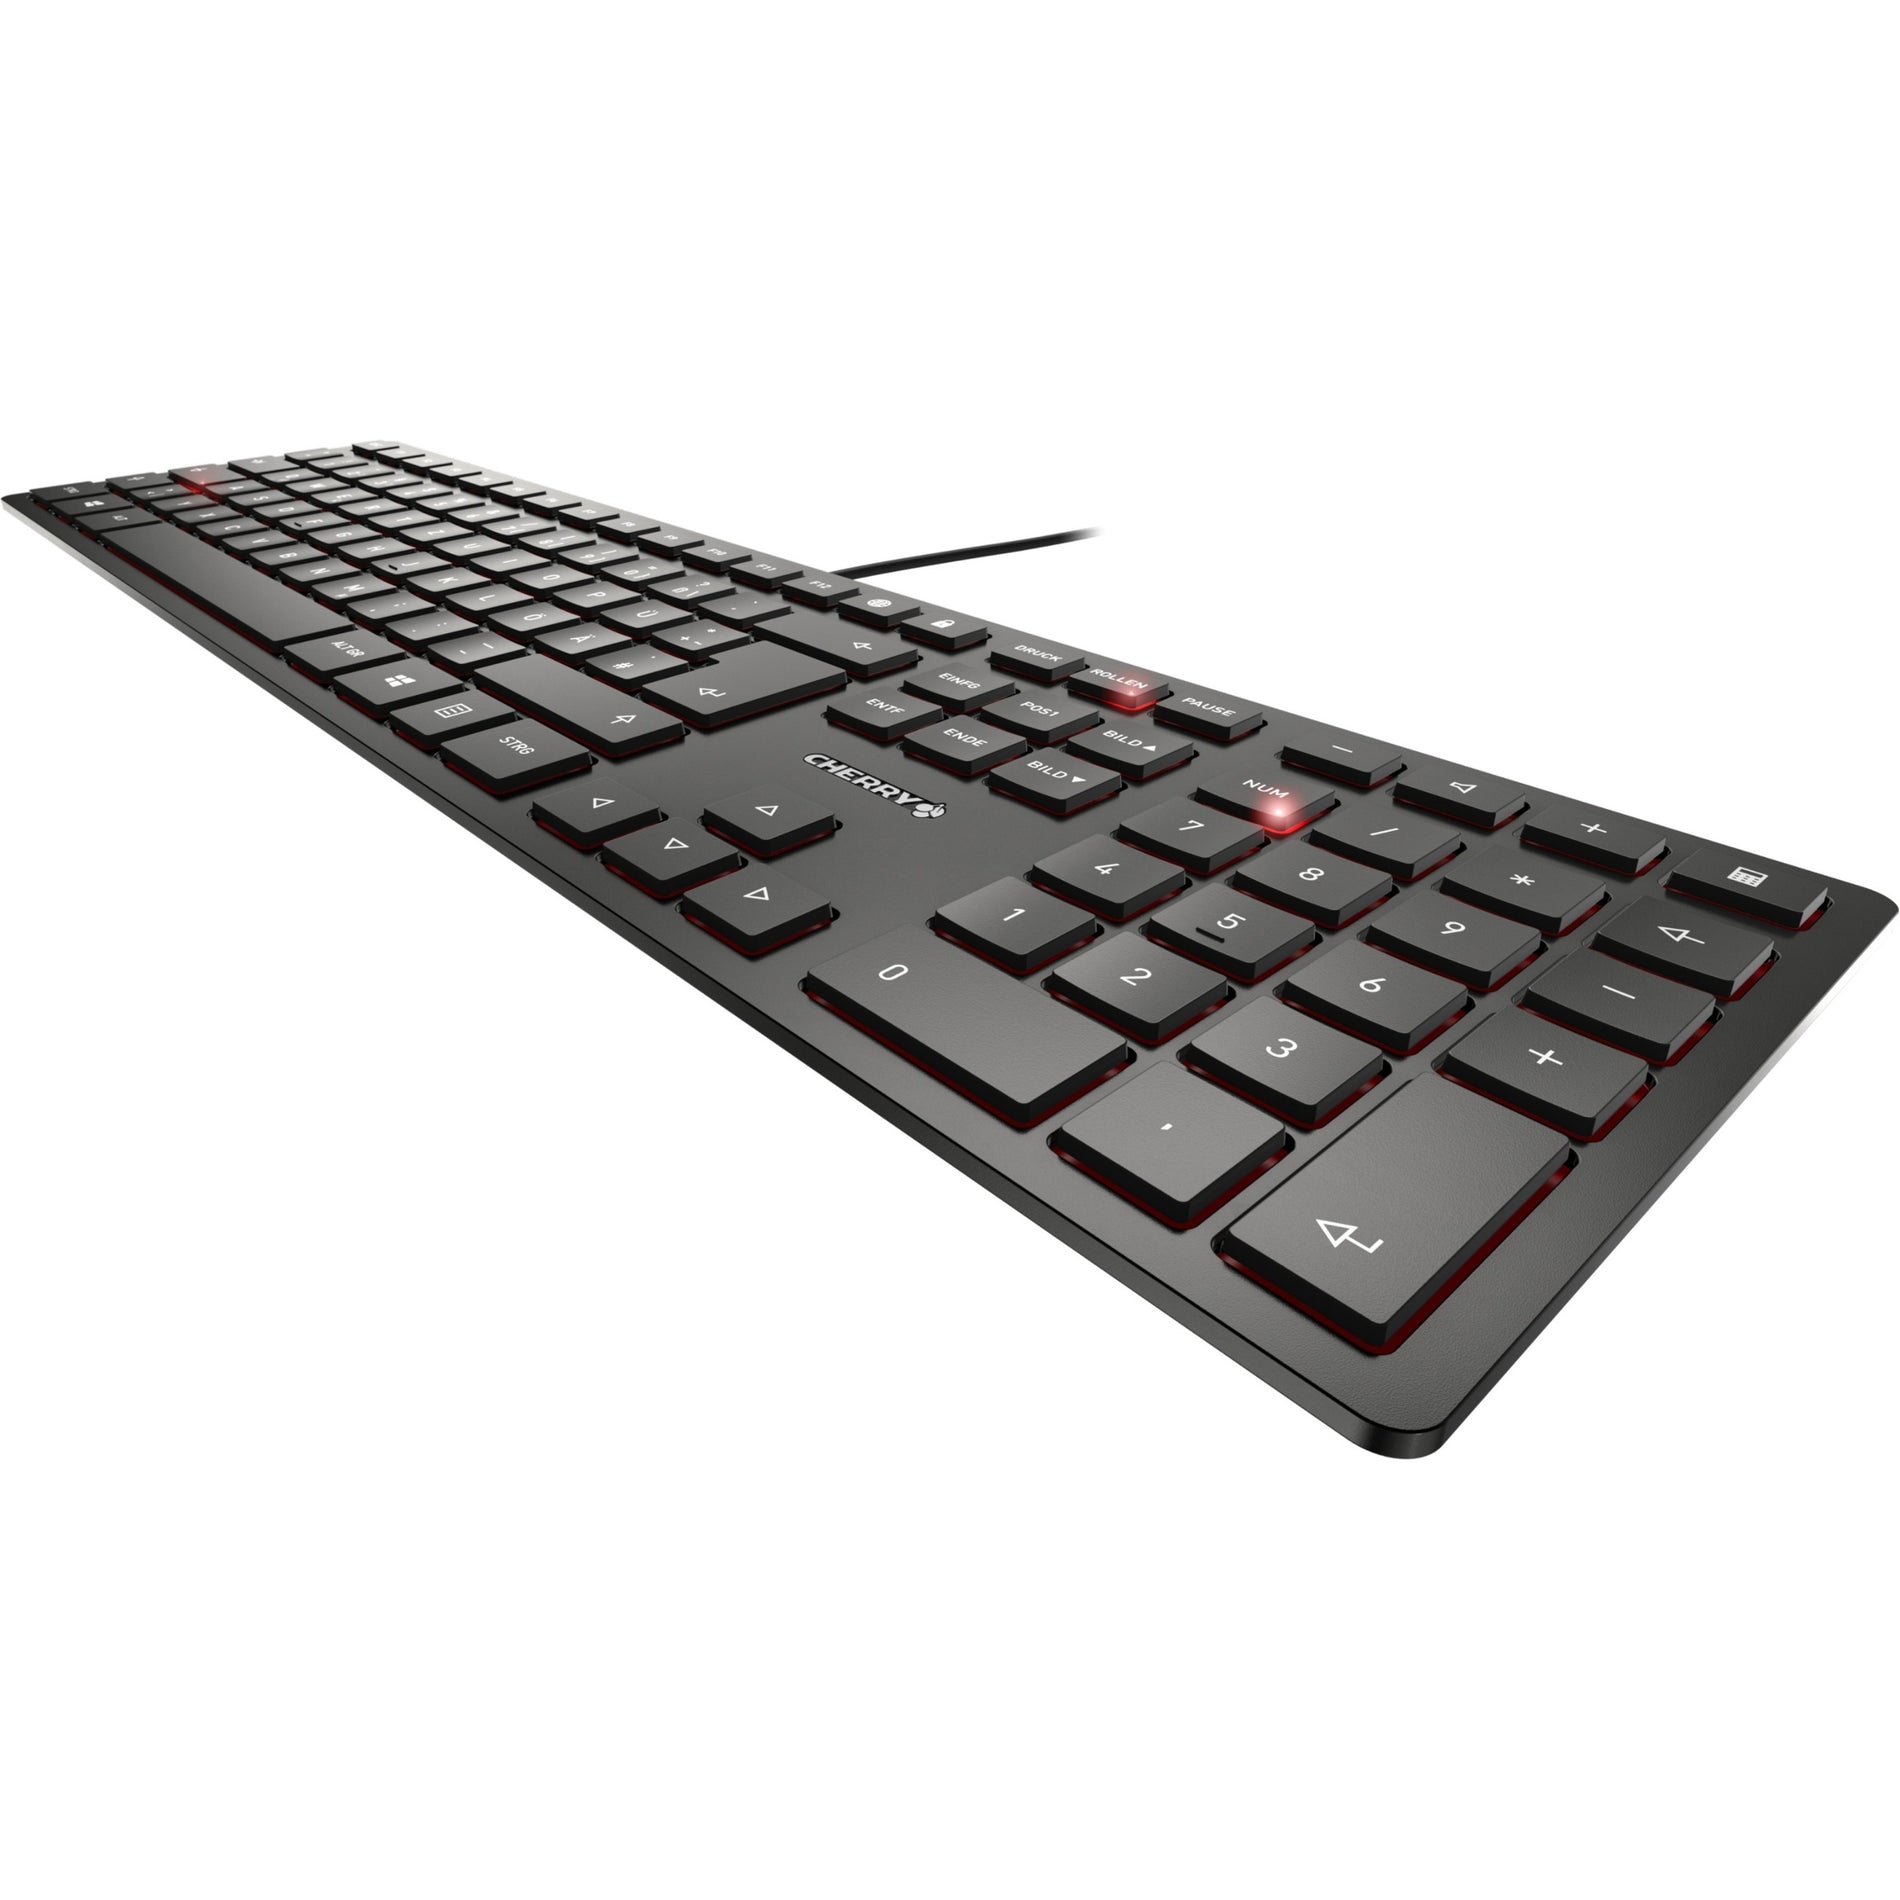 CHERRY JK-1600EU-2 KC 6000 SLIM Black Wired Keyboard, Multimedia Hot Keys, QWERTZ Layout